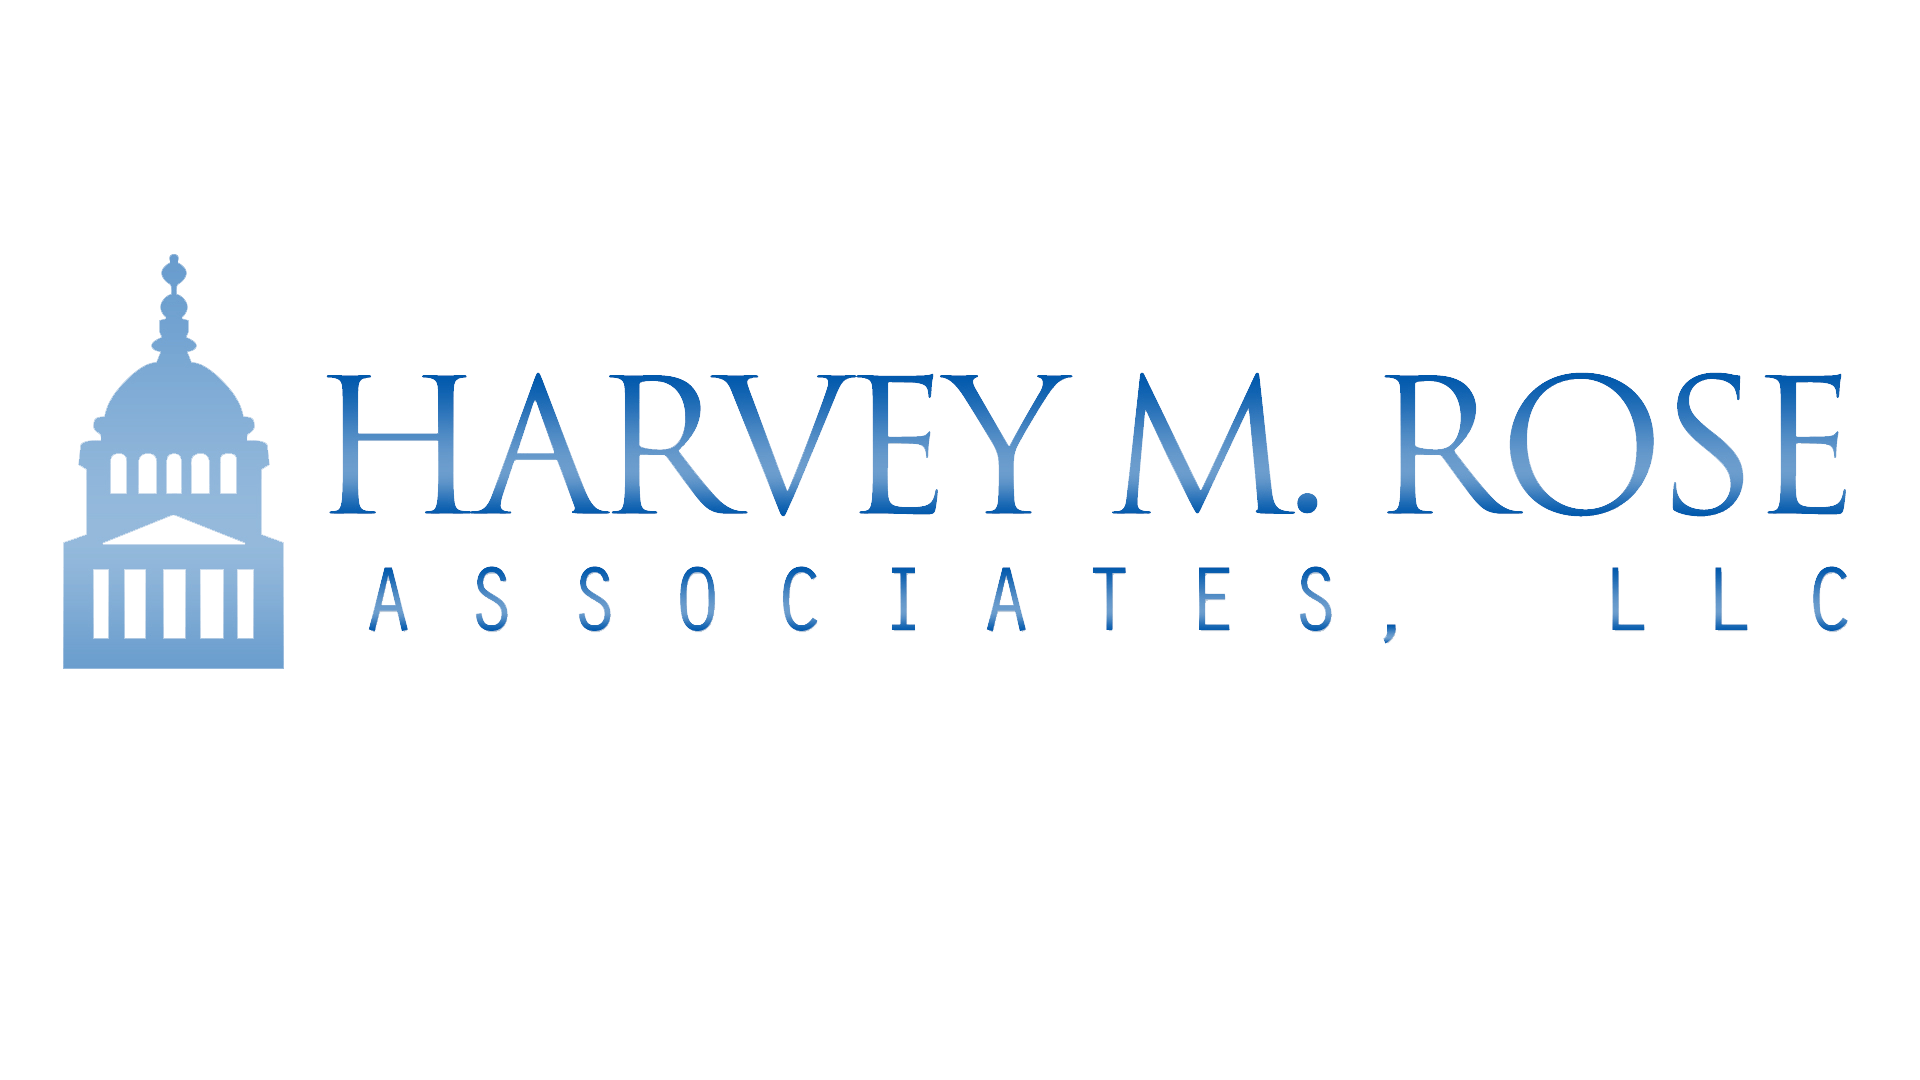 Harvey M. Rose Associates, LLC